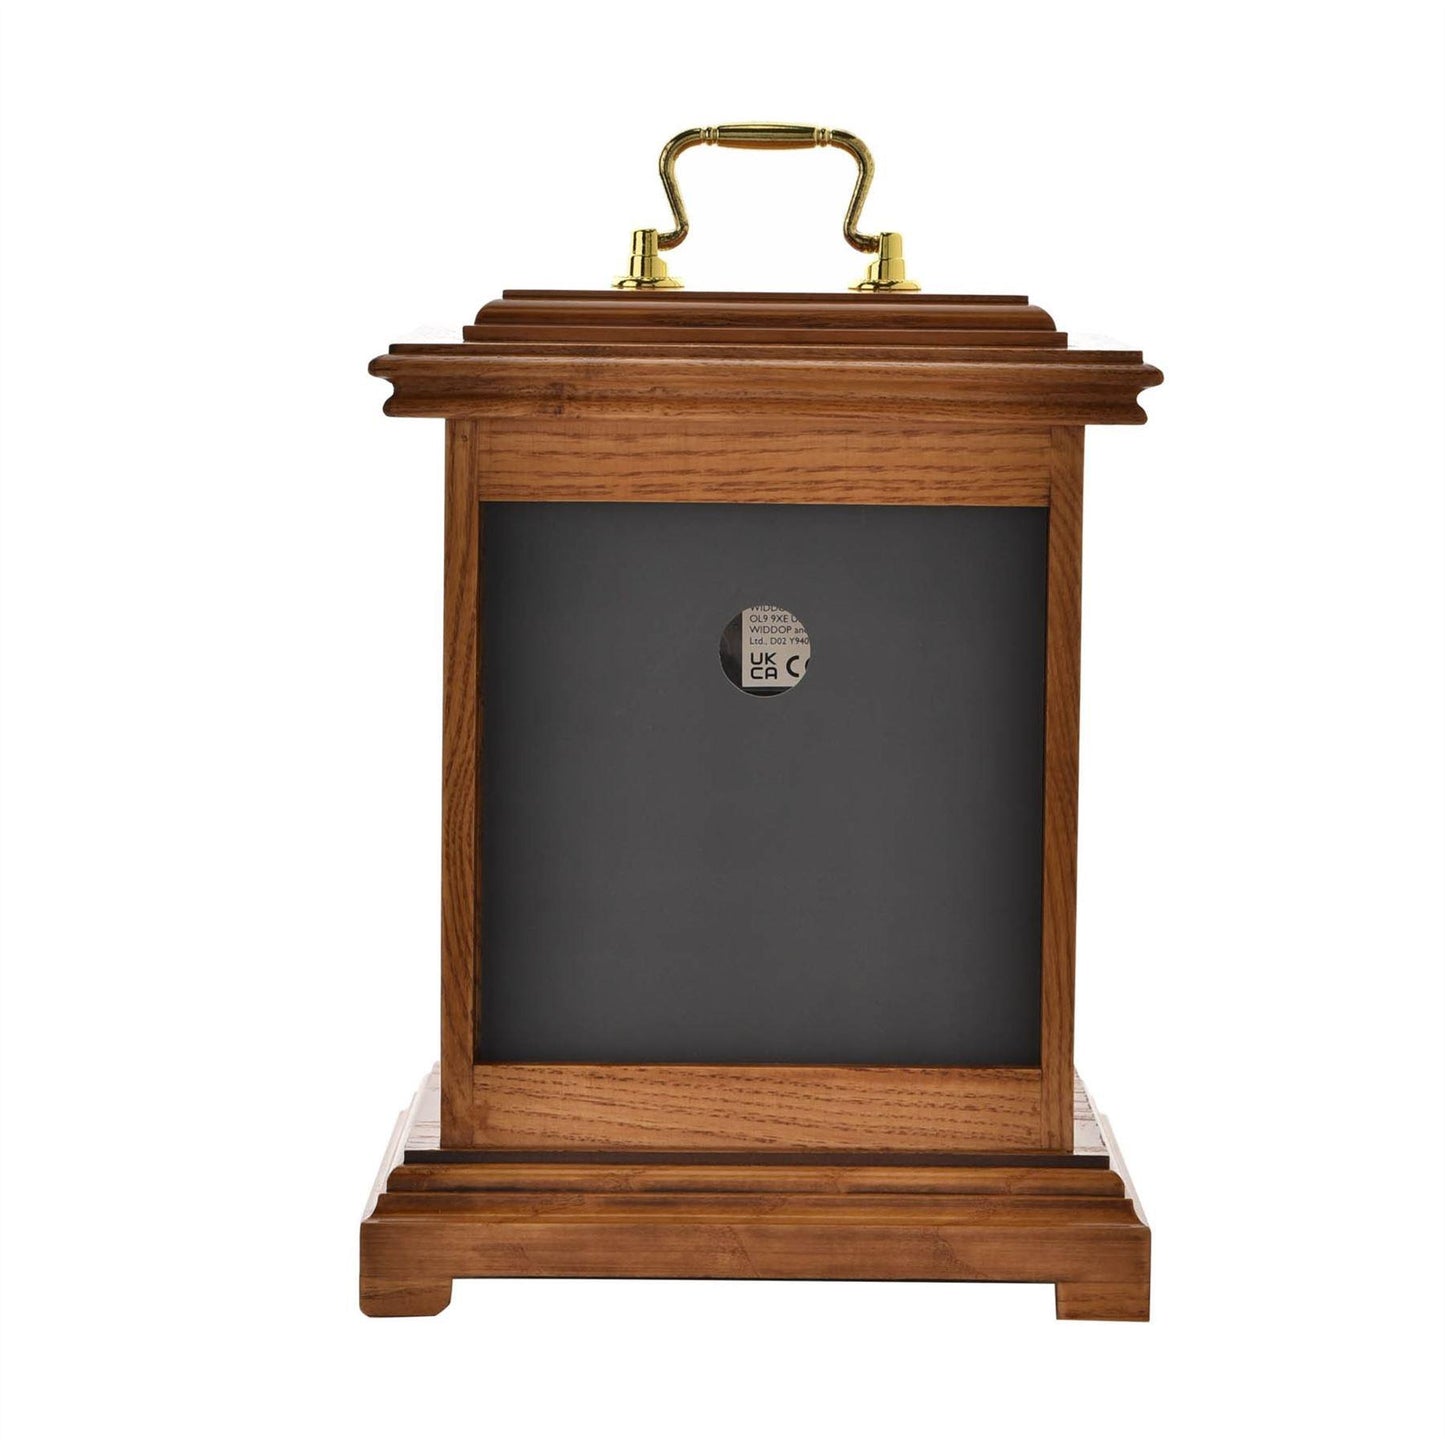 William Widdop Wooden Lantern Style Mantel Clock with Handle W2006